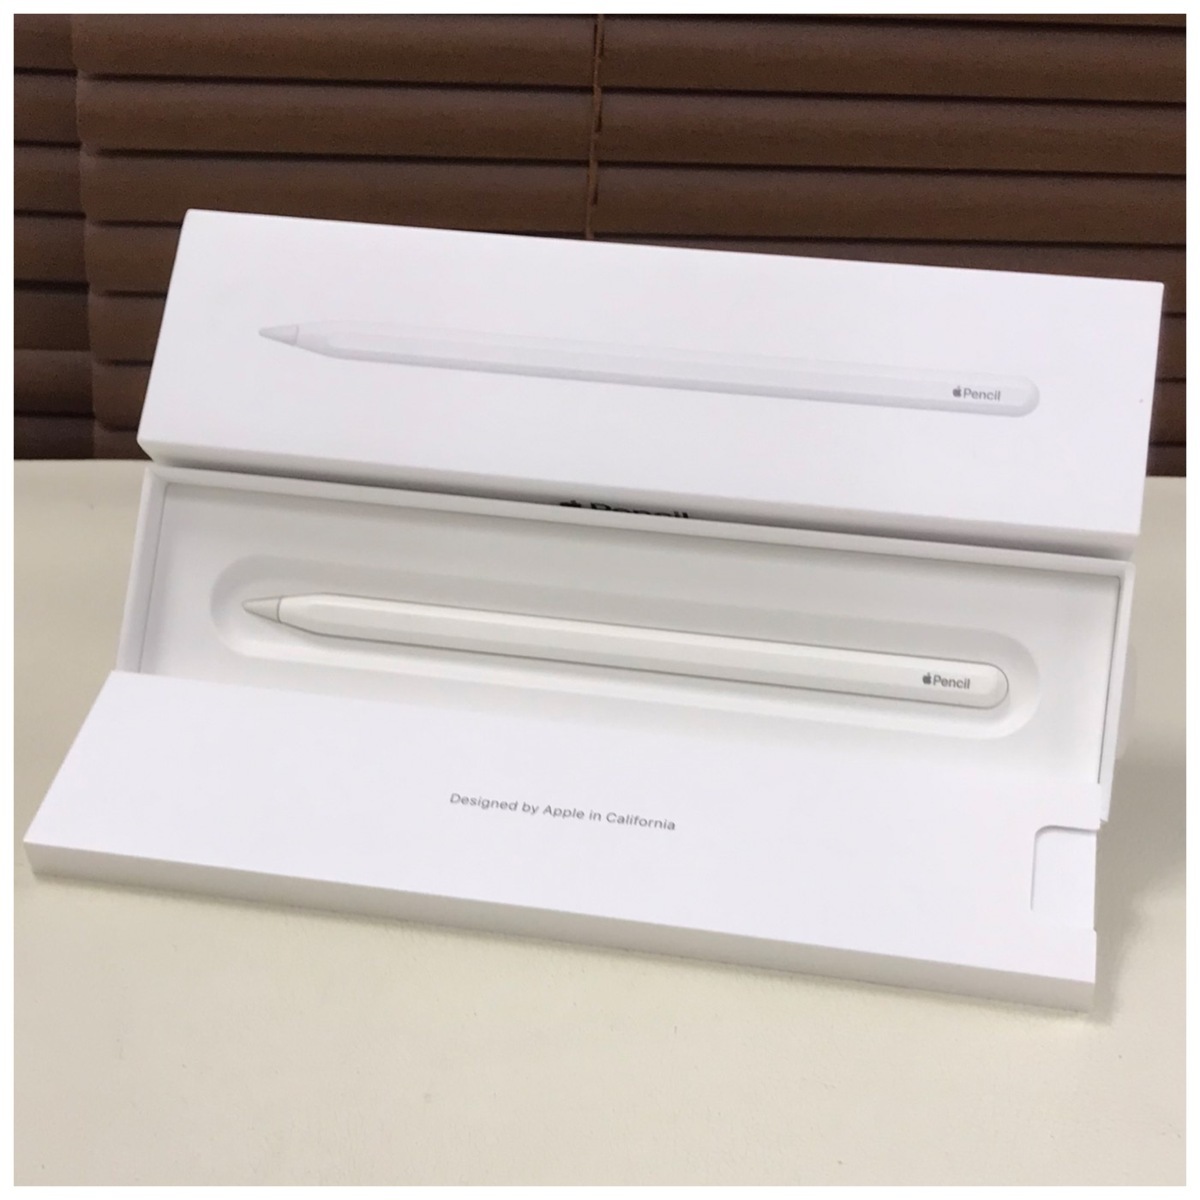 Apple Pencil(アップルペンシル) 第2世代中古品ユモ5ー2A | JChere雅虎 